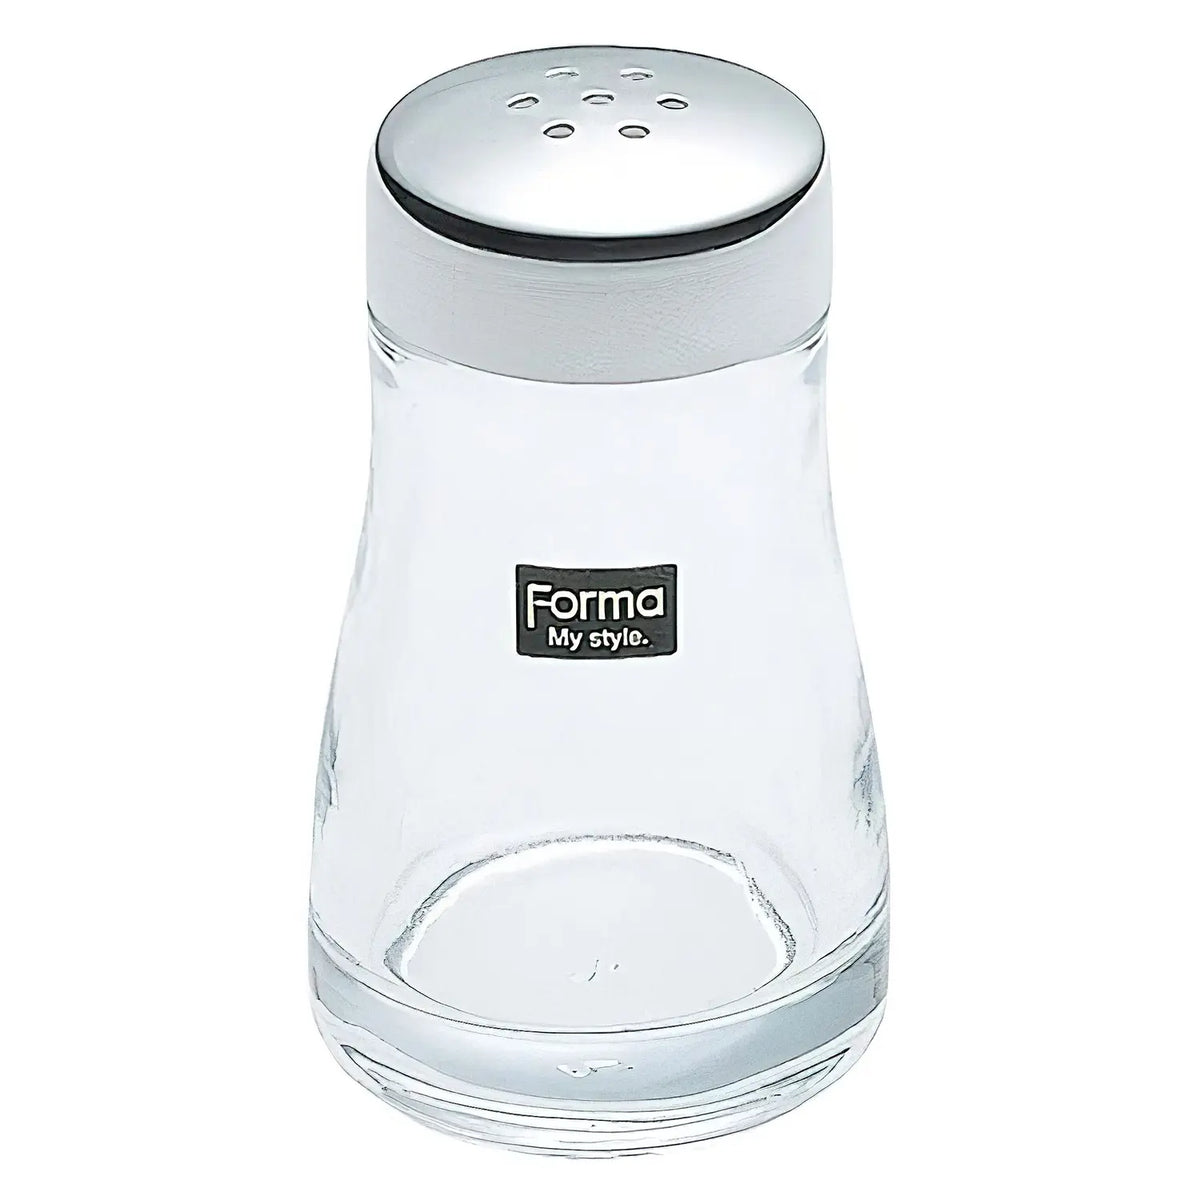 Better Bodies -Better Bodies Ice Shaker, a superior shaker bottle with  Better Bodies logo.